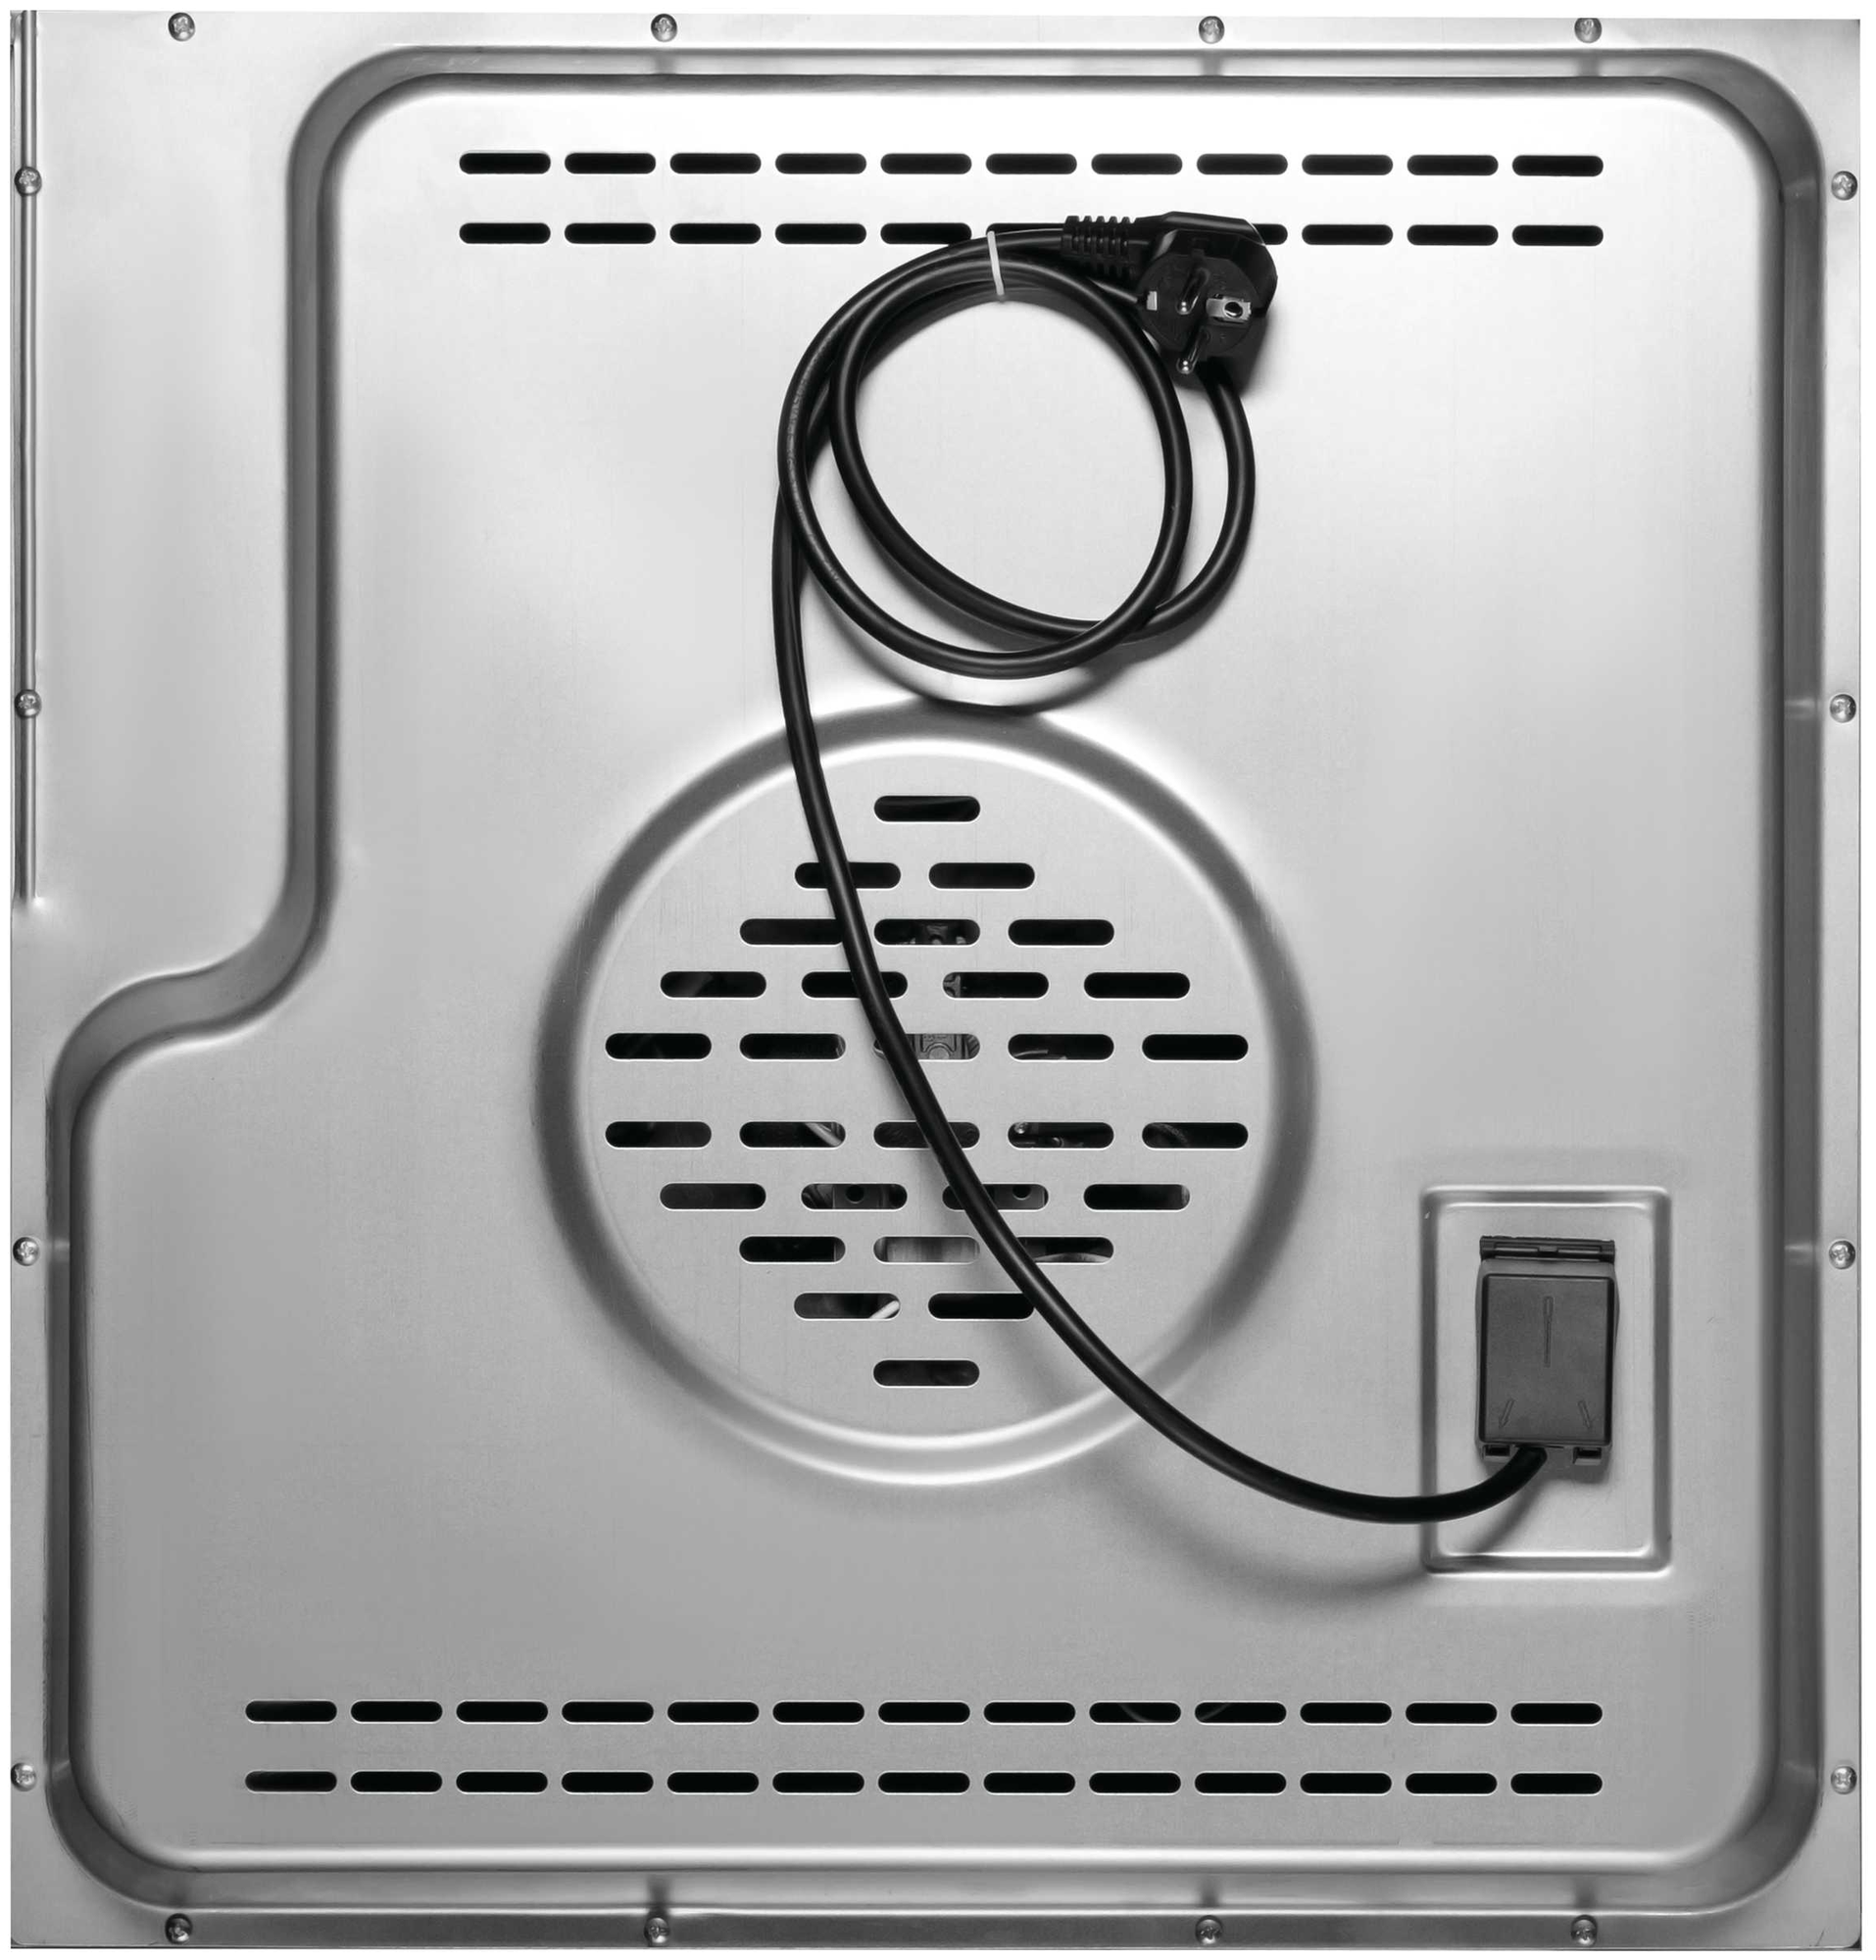 Электрический духовой шкаф Korting OKB 591 CSGW